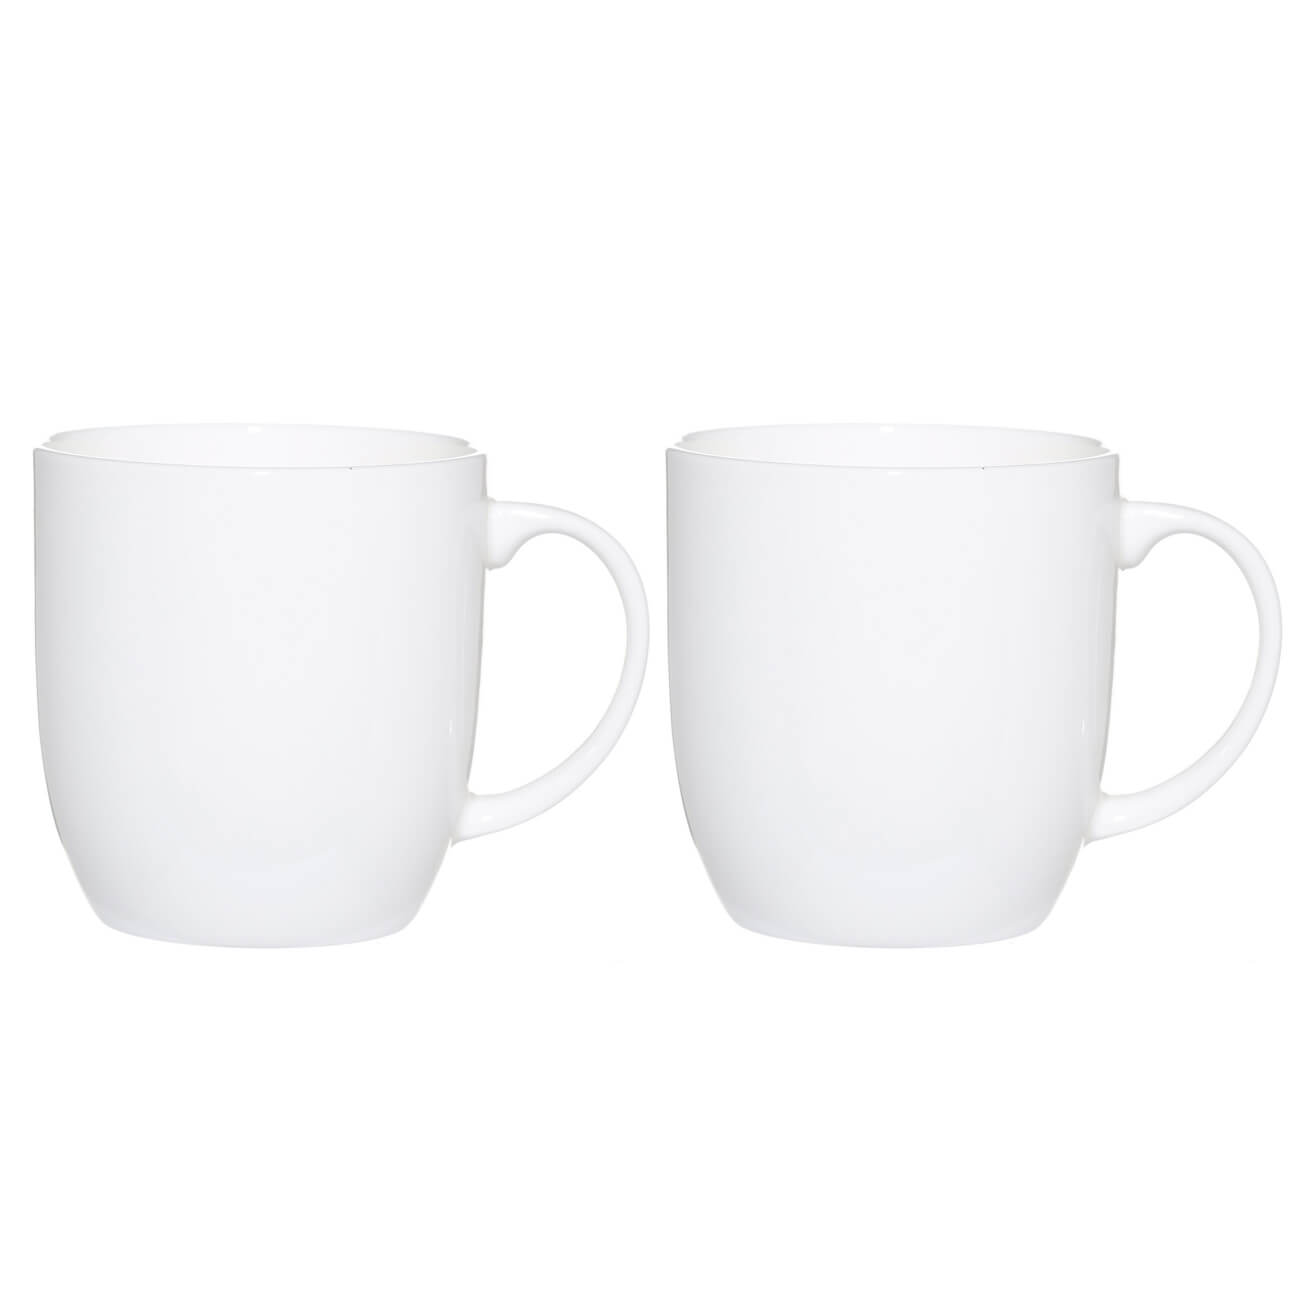 Mug, 370 ml, 2 pcs, porcelain F, white, Ideal white изображение № 1